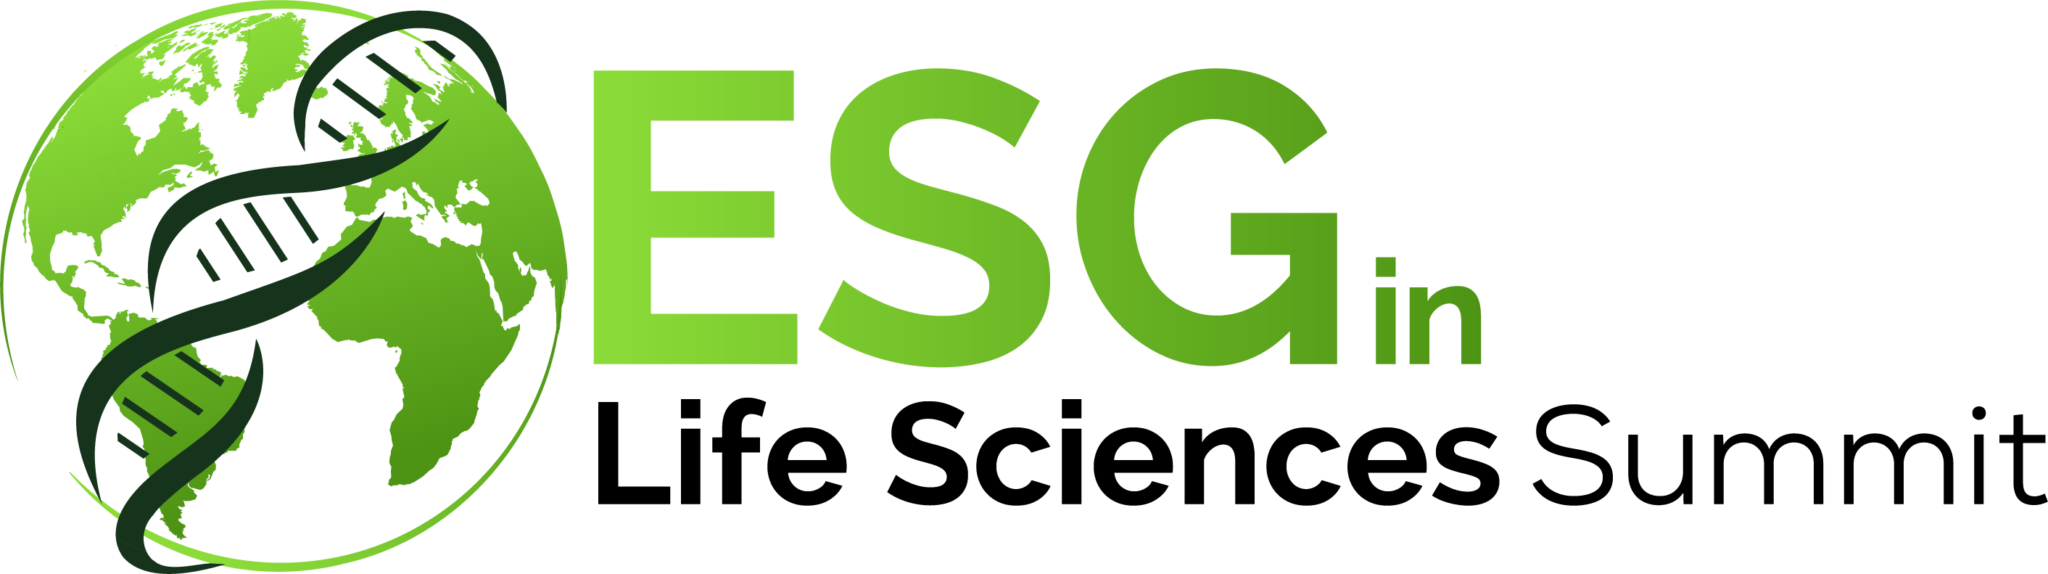 ESG-in-Life-Sciences-Summit-logo-2048x574 (1)